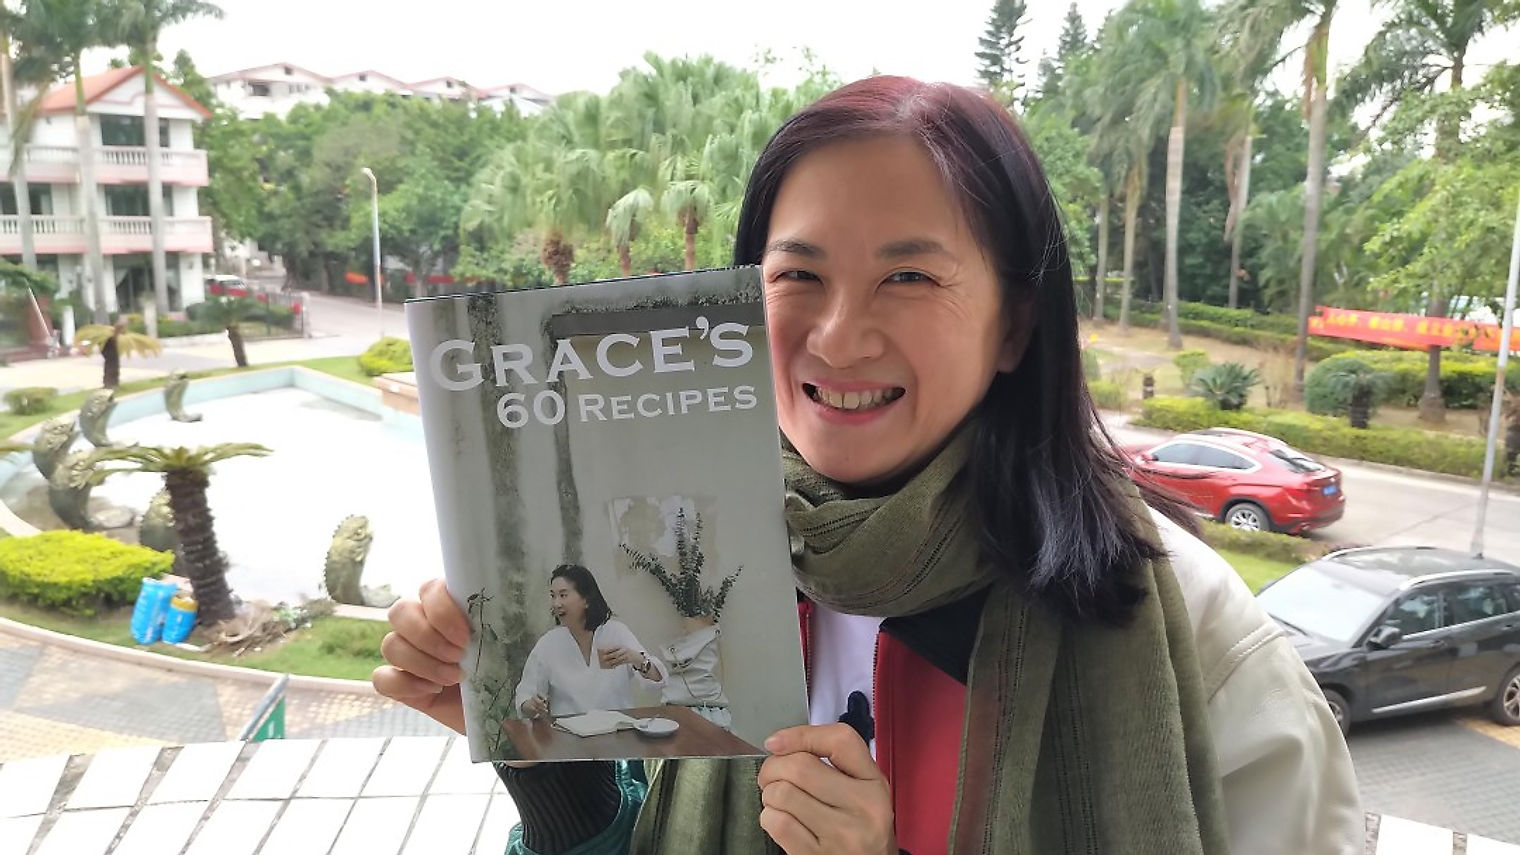 Grace's 60 Recipes